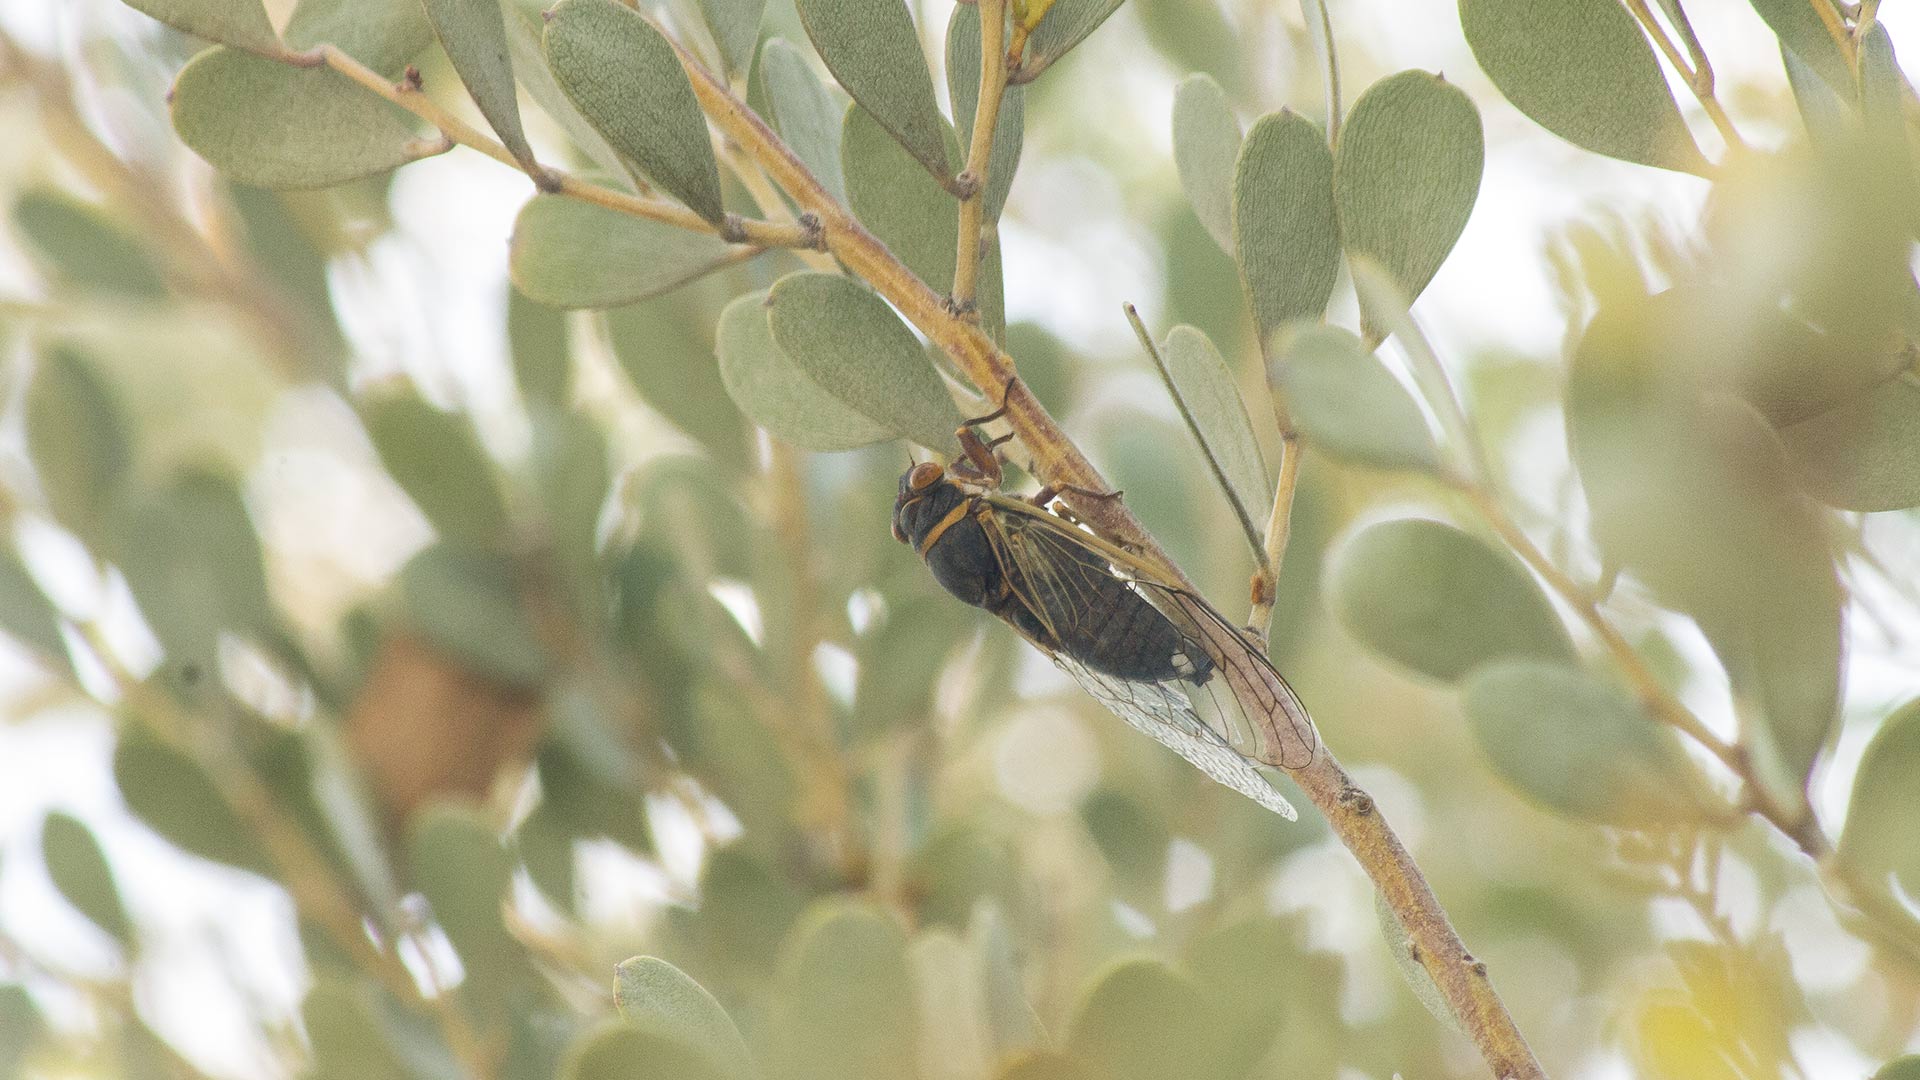 A cicada sits on a branch.